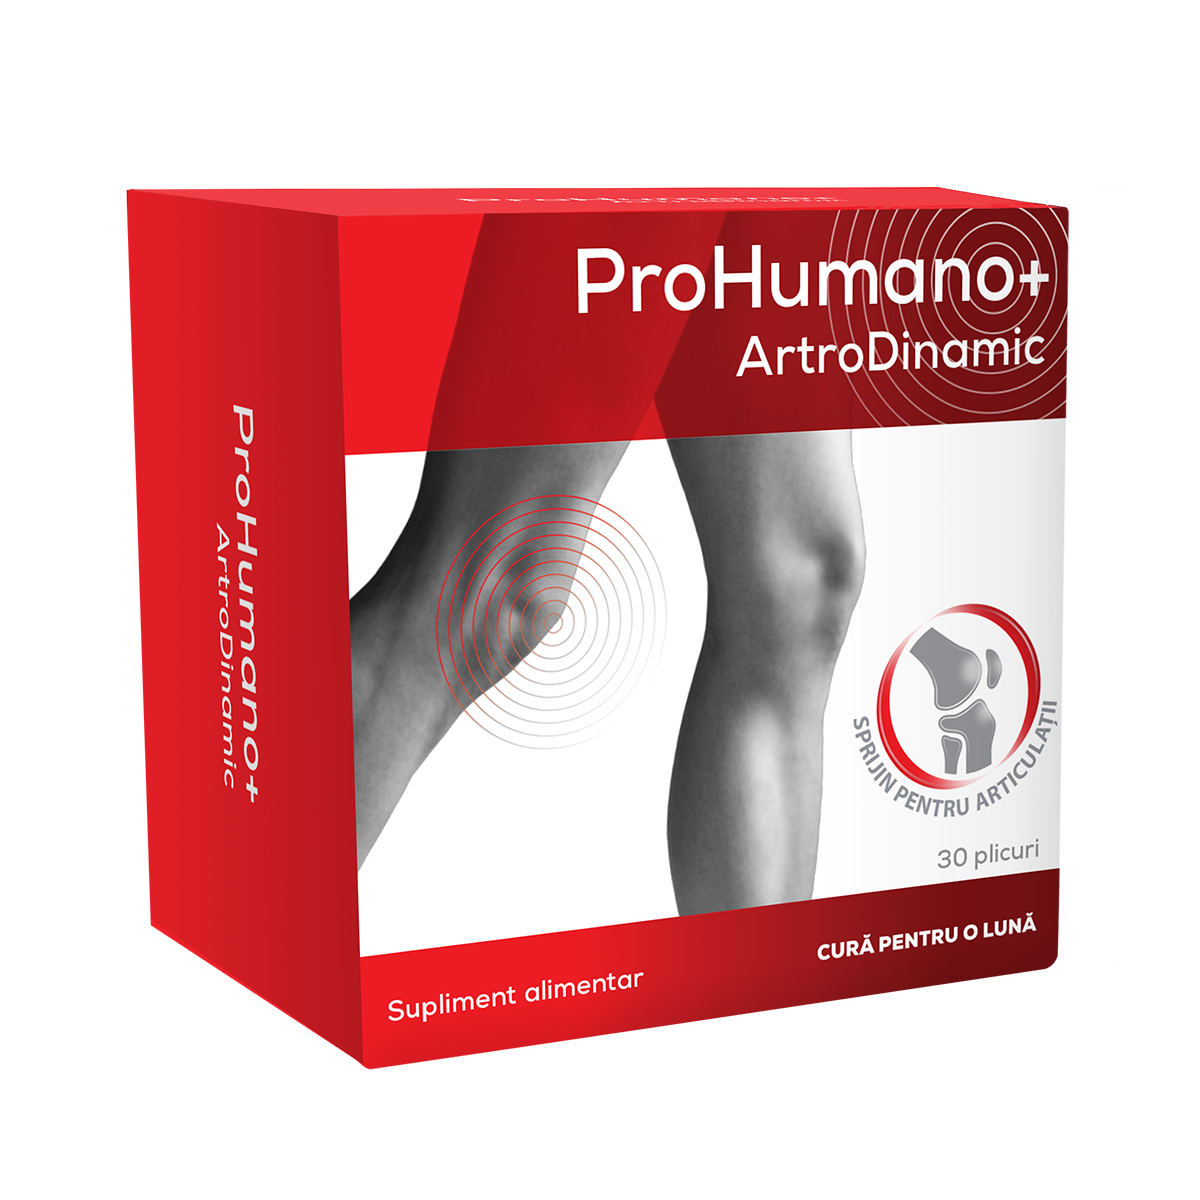 Adulti - ProHumano+ ArtroDinamic, 30 plicuri, Pharmalinea, sinapis.ro